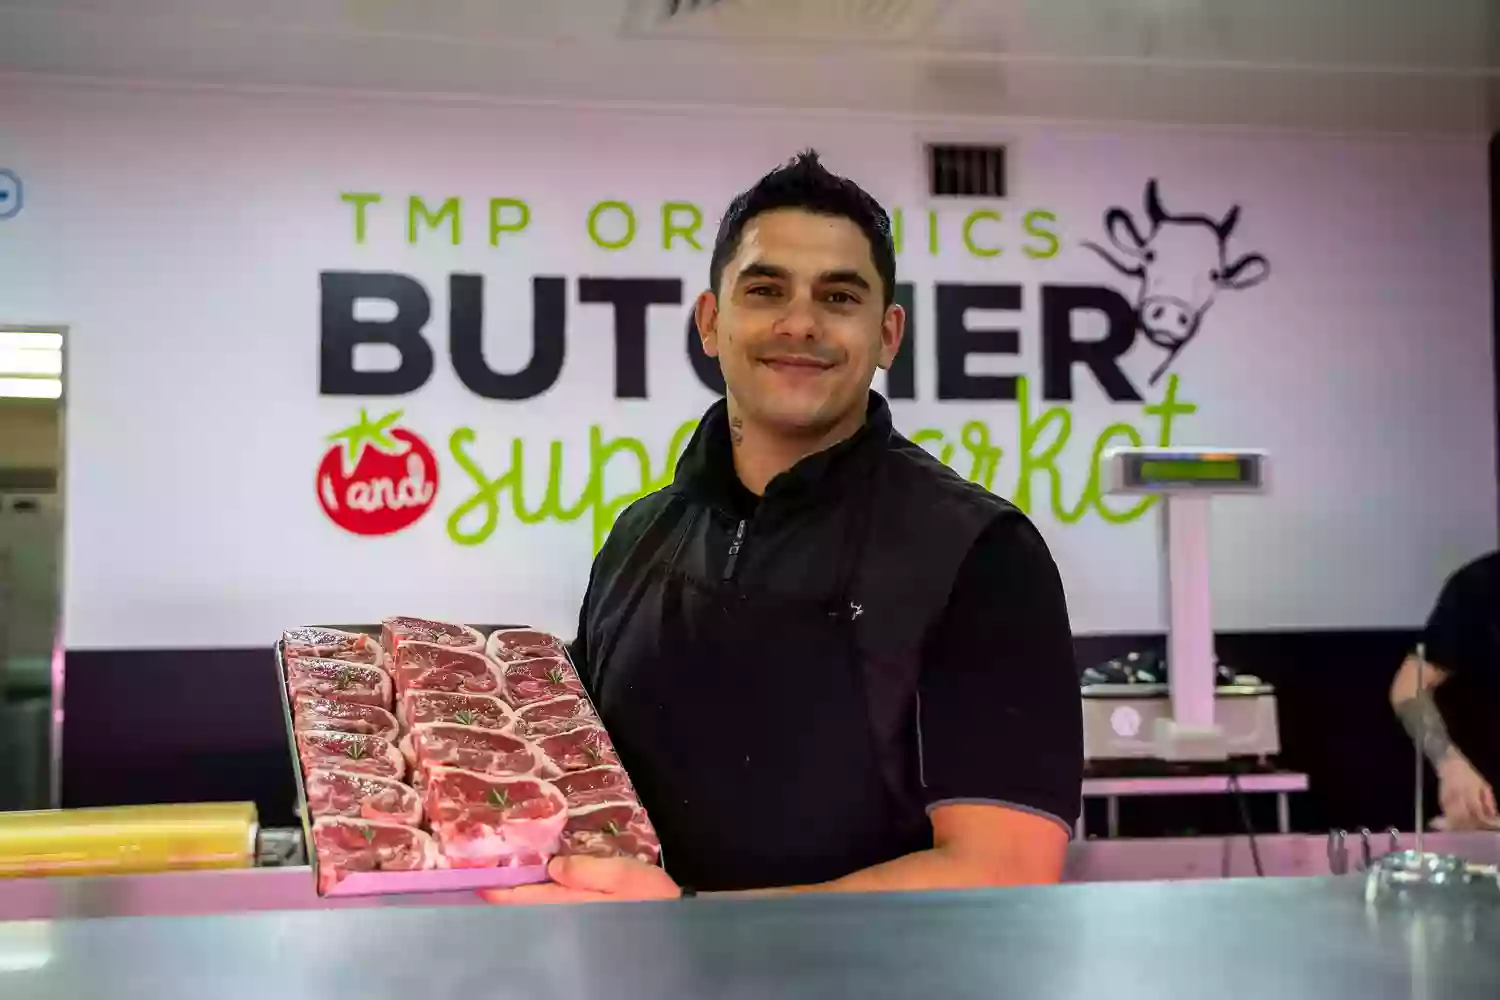 TMP Organics Butcher And Supermarket